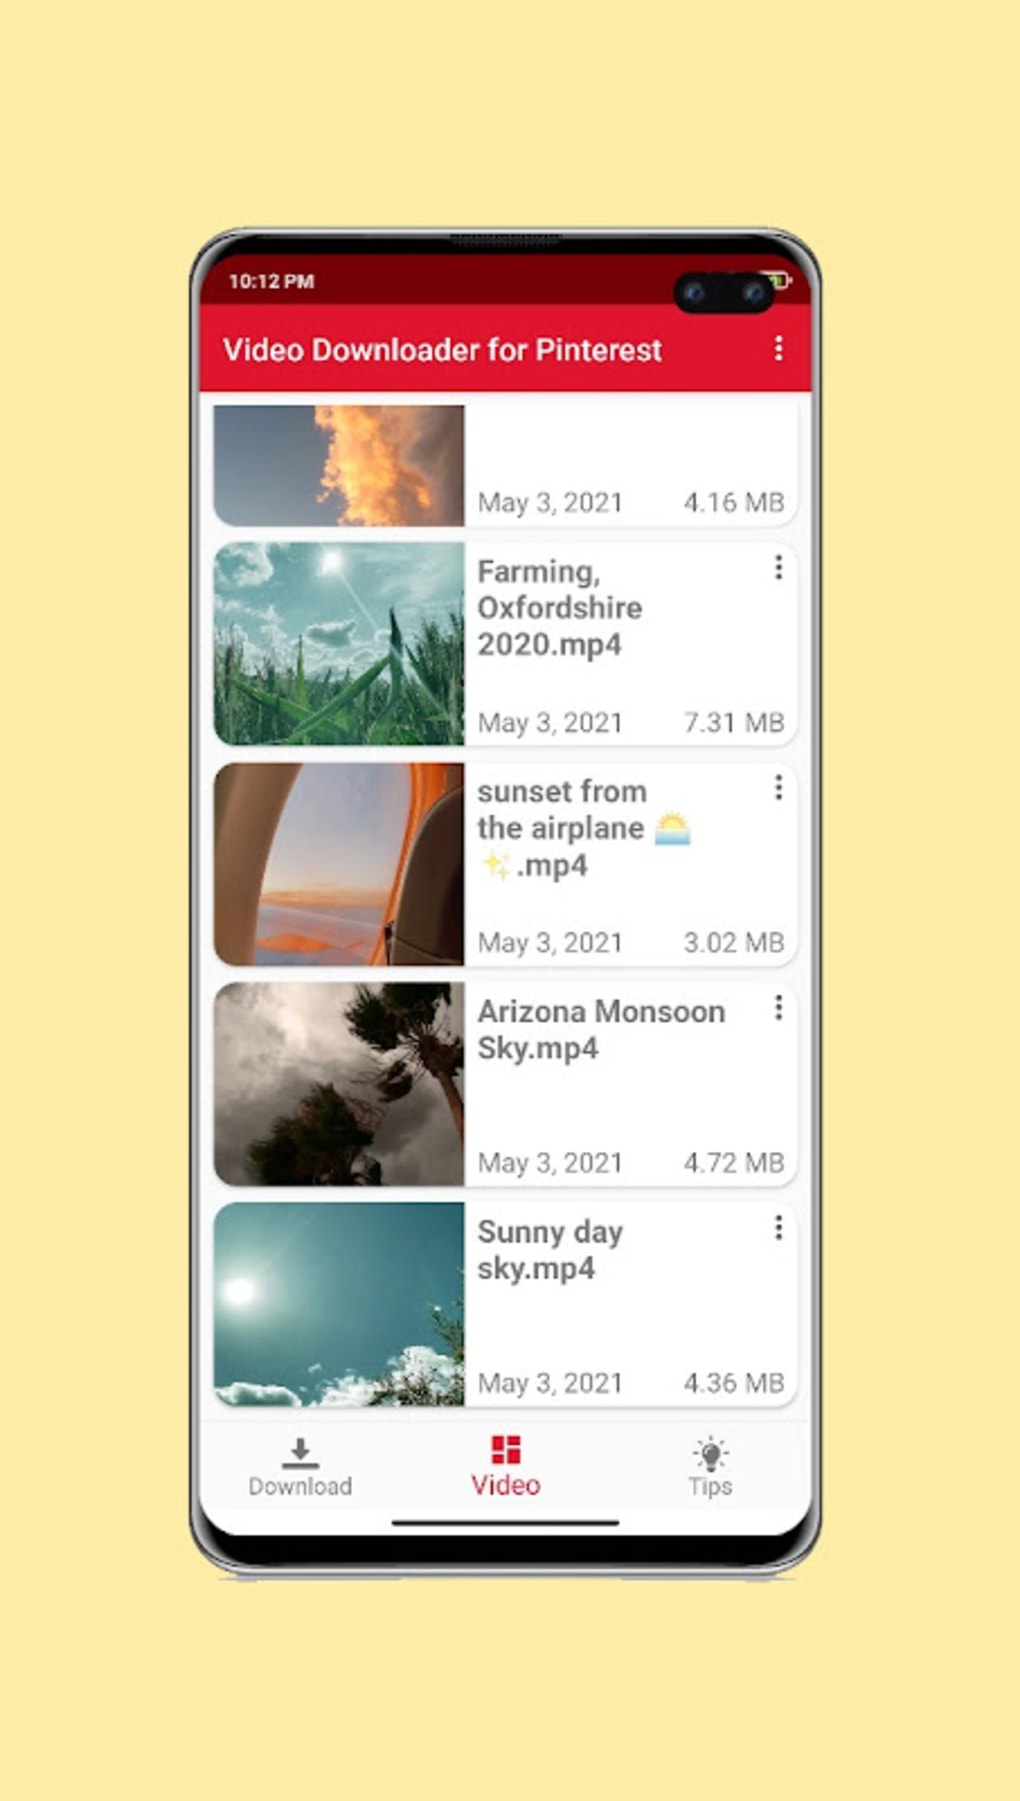 Pinterest Video Downloader for Android - Download